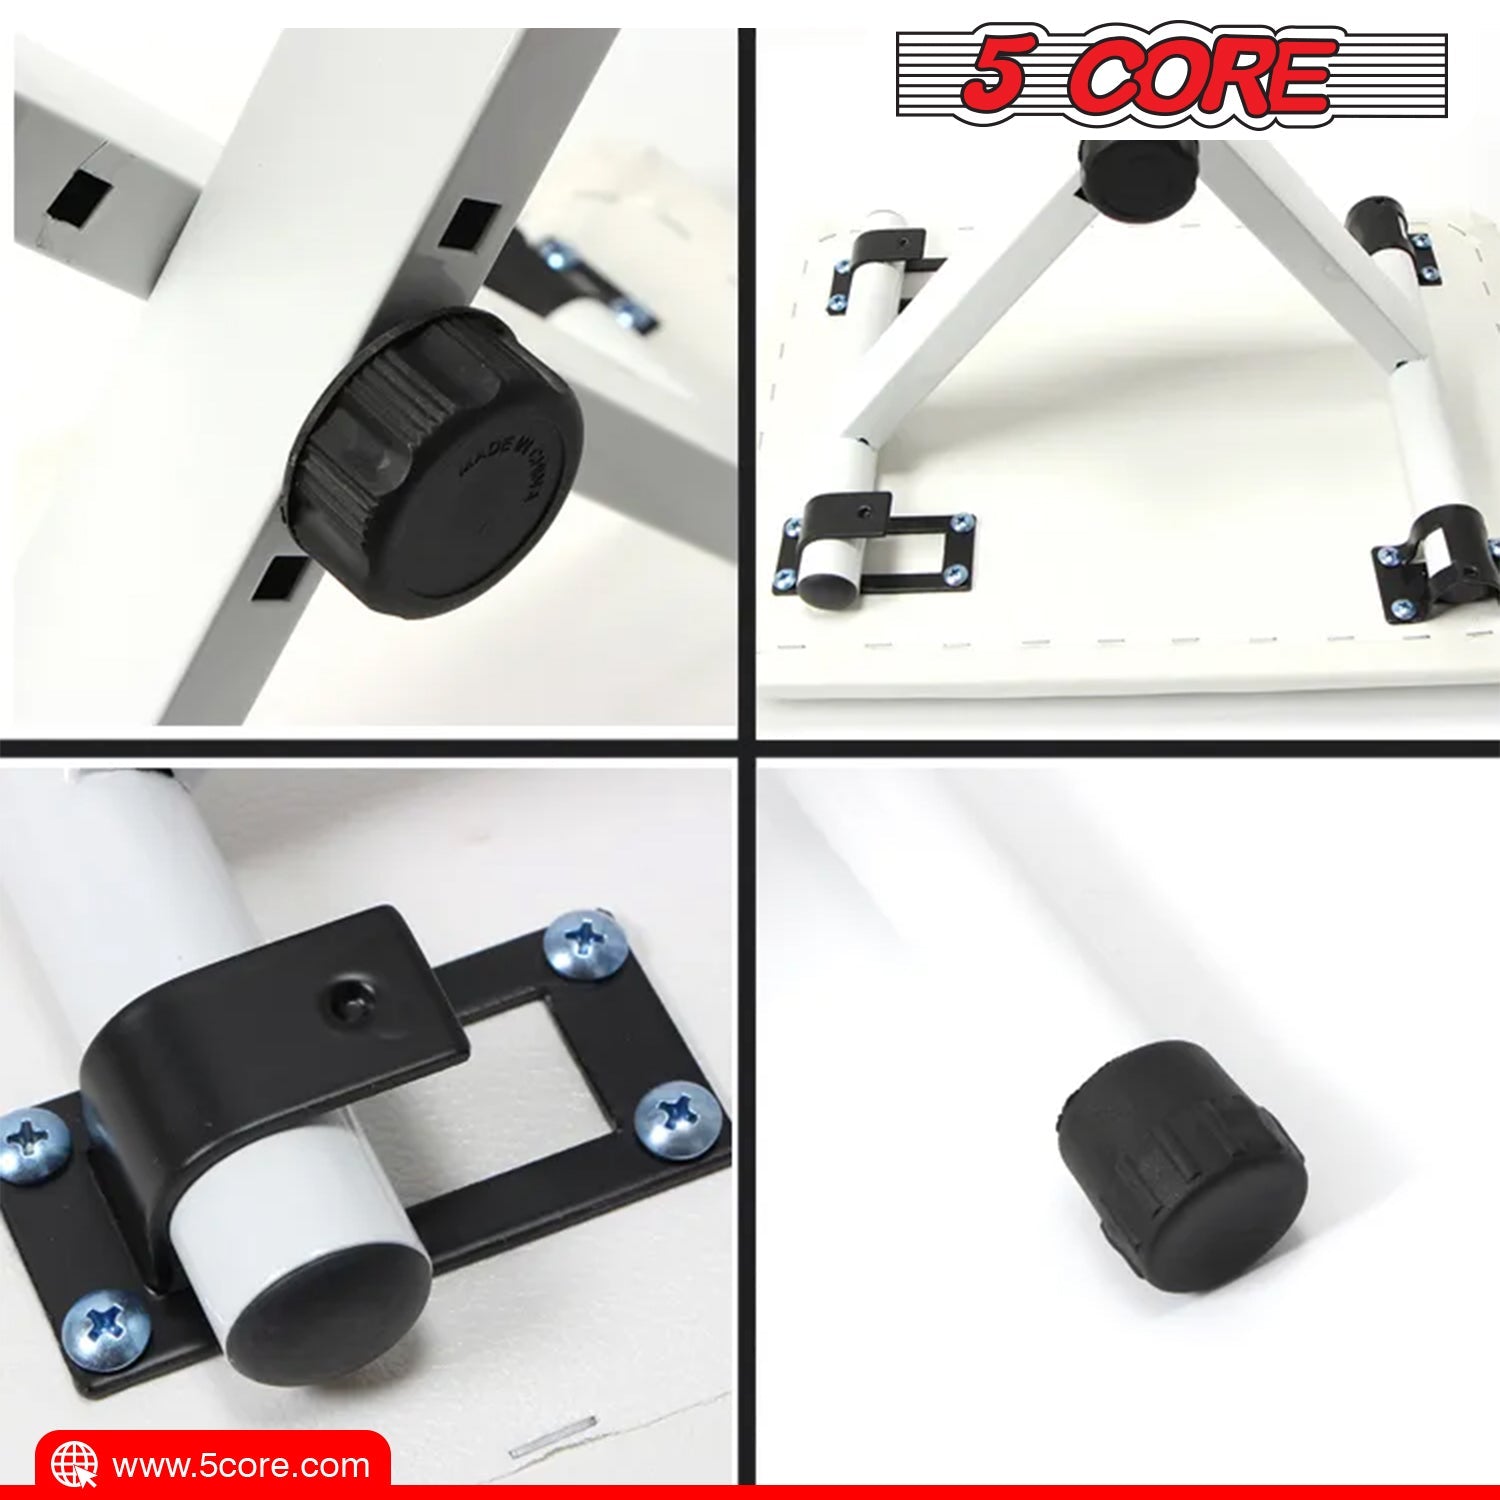 Portable Adjustable Padded Keyboard Stool | EastTone® - Stringspeed